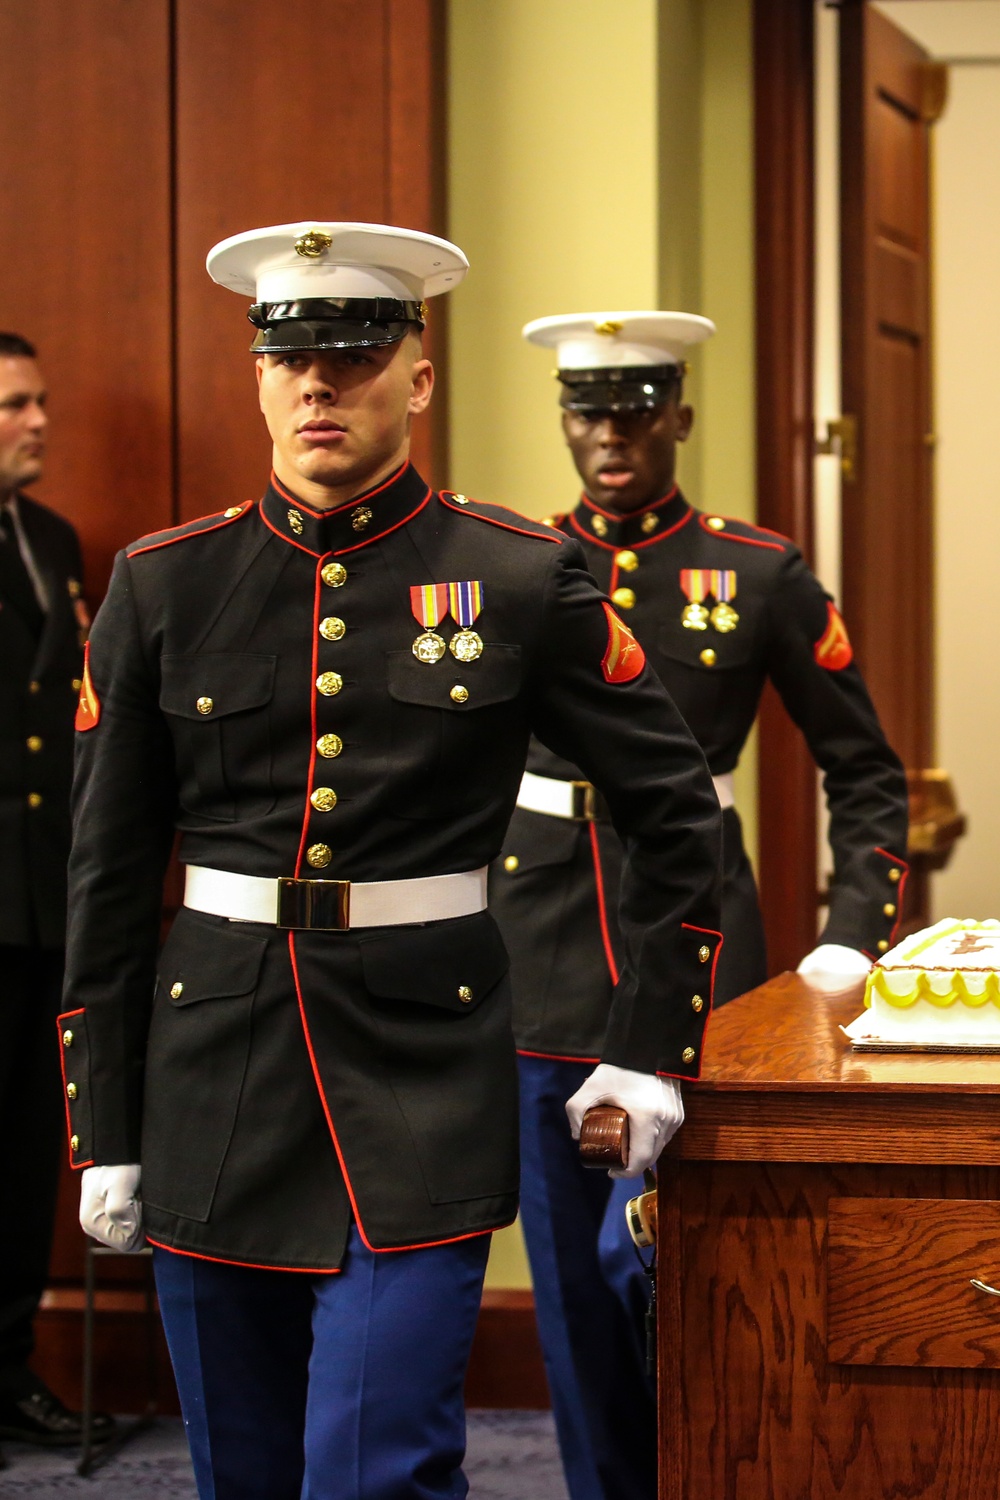 House of Representatives' Marine Corps Birthdau cake cutting ceremony